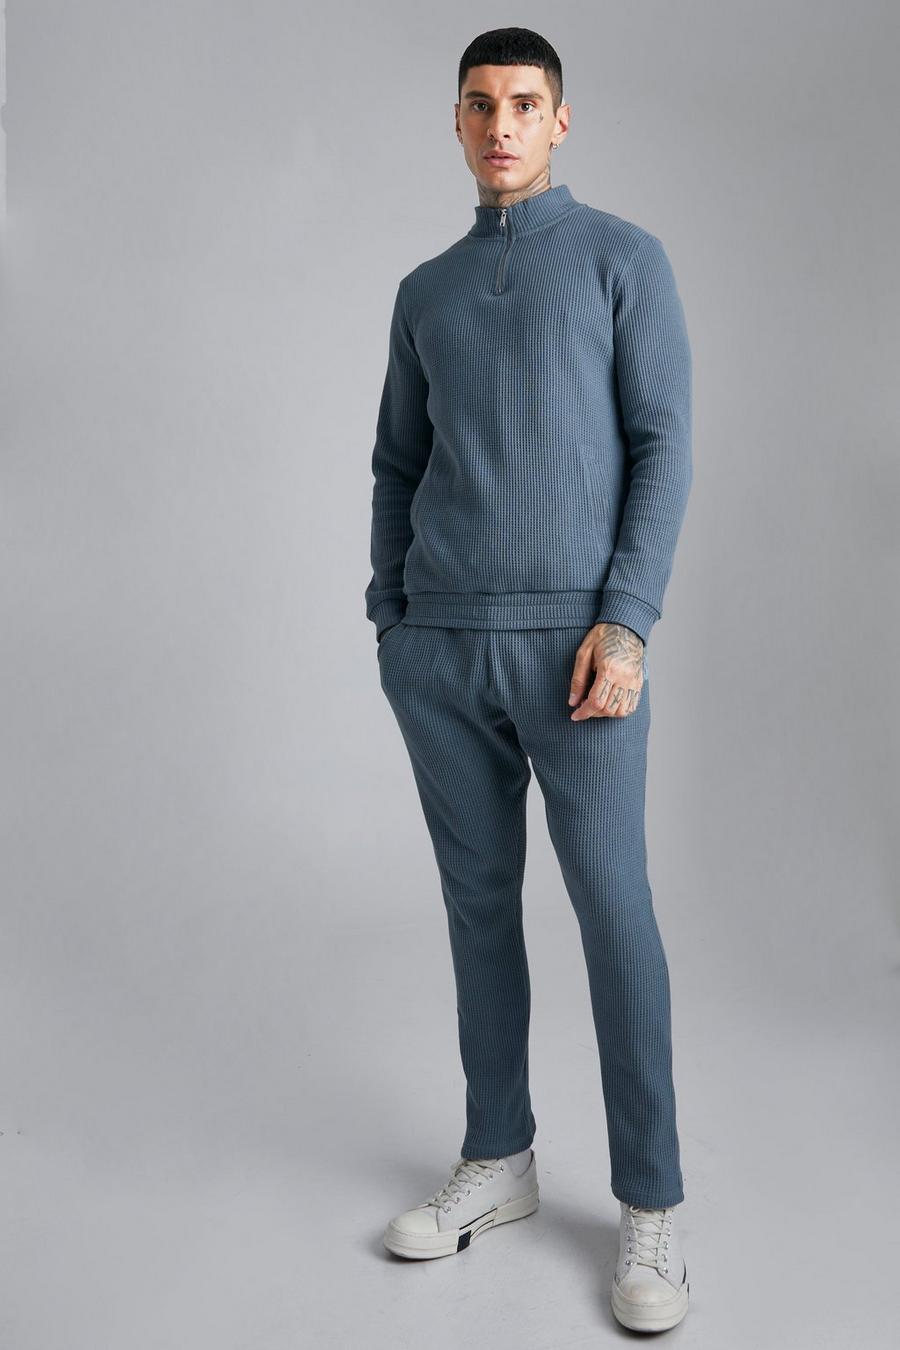 Slate blue blå Sweatshirt med hög krage mjukisbyxor